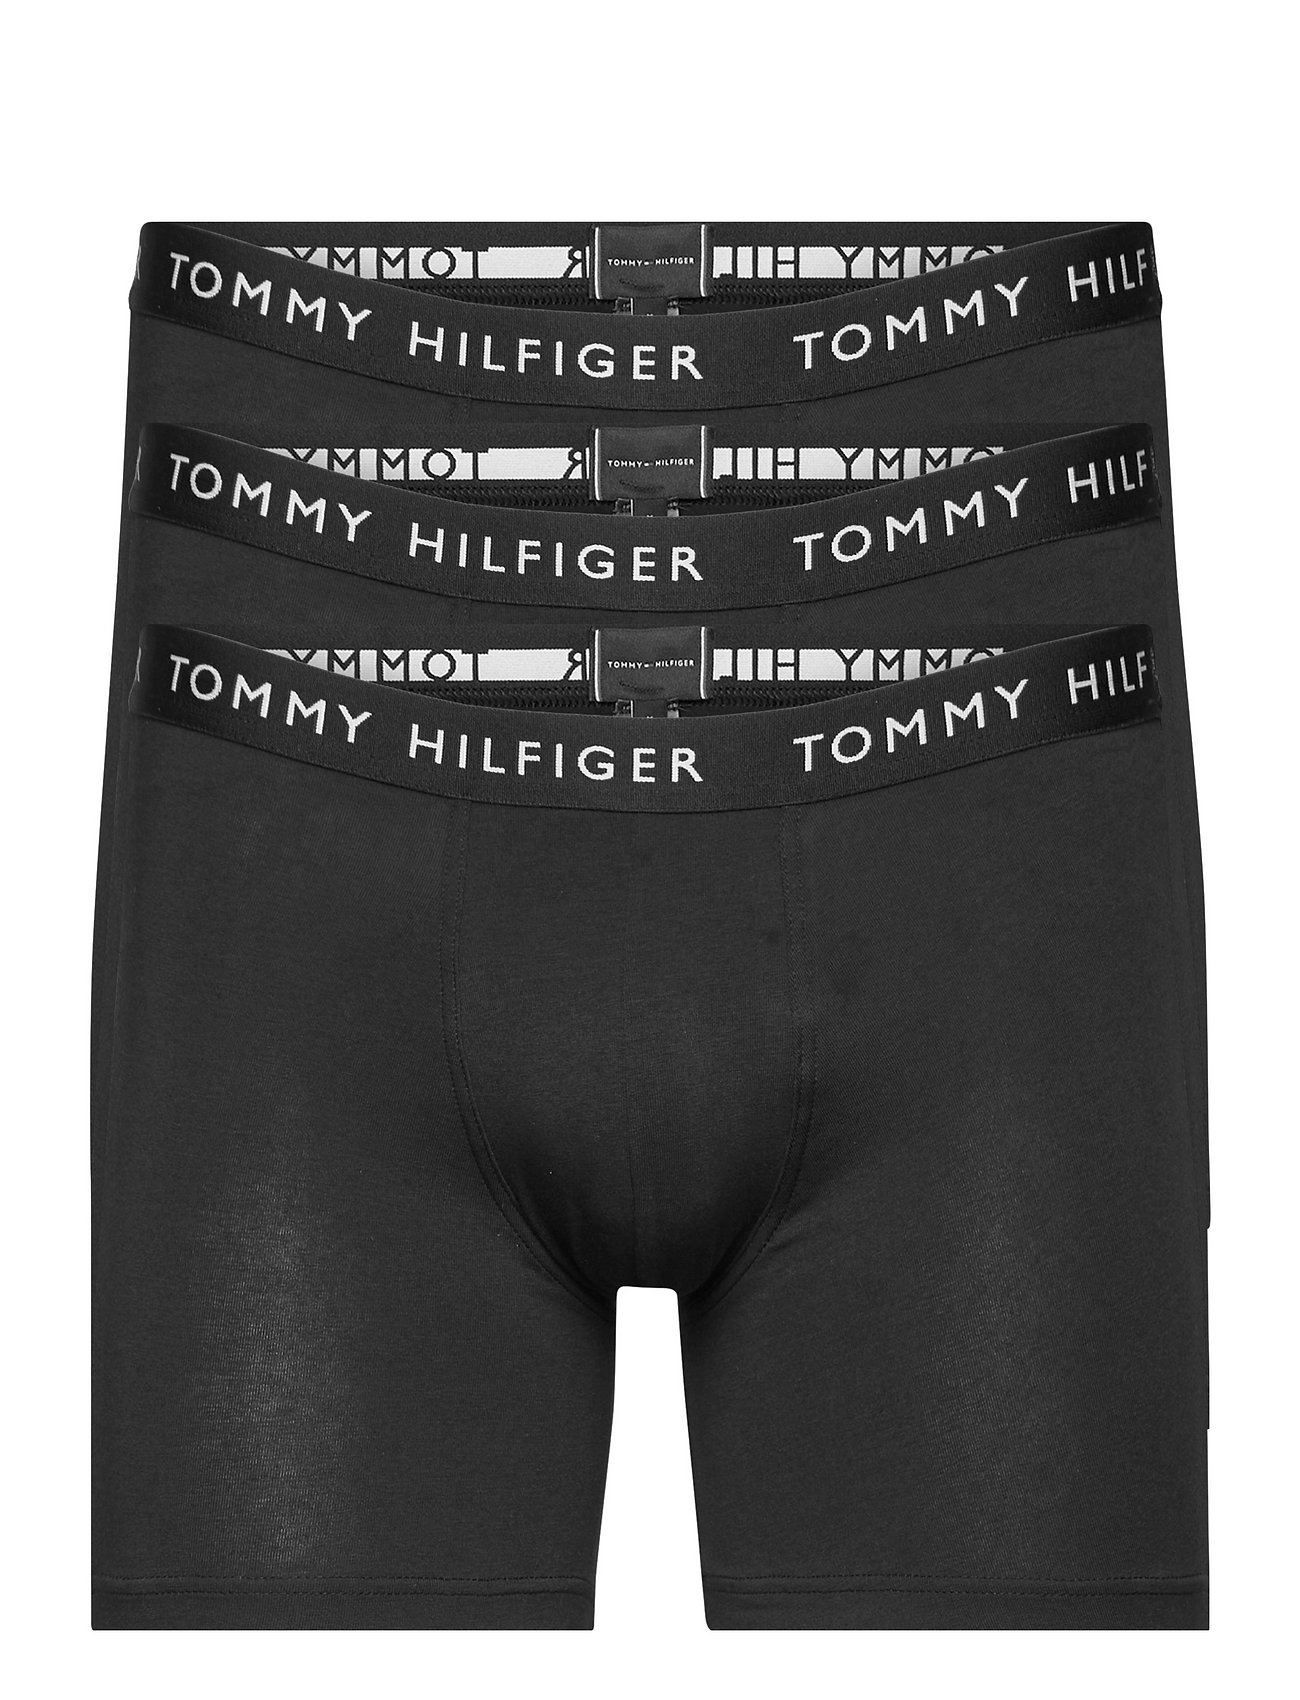 https://ean-images.booztcdn.com/tommy-hilfiger-underwear/1300x1700/thuum0um02204_cblackblackblack_v0te.jpg